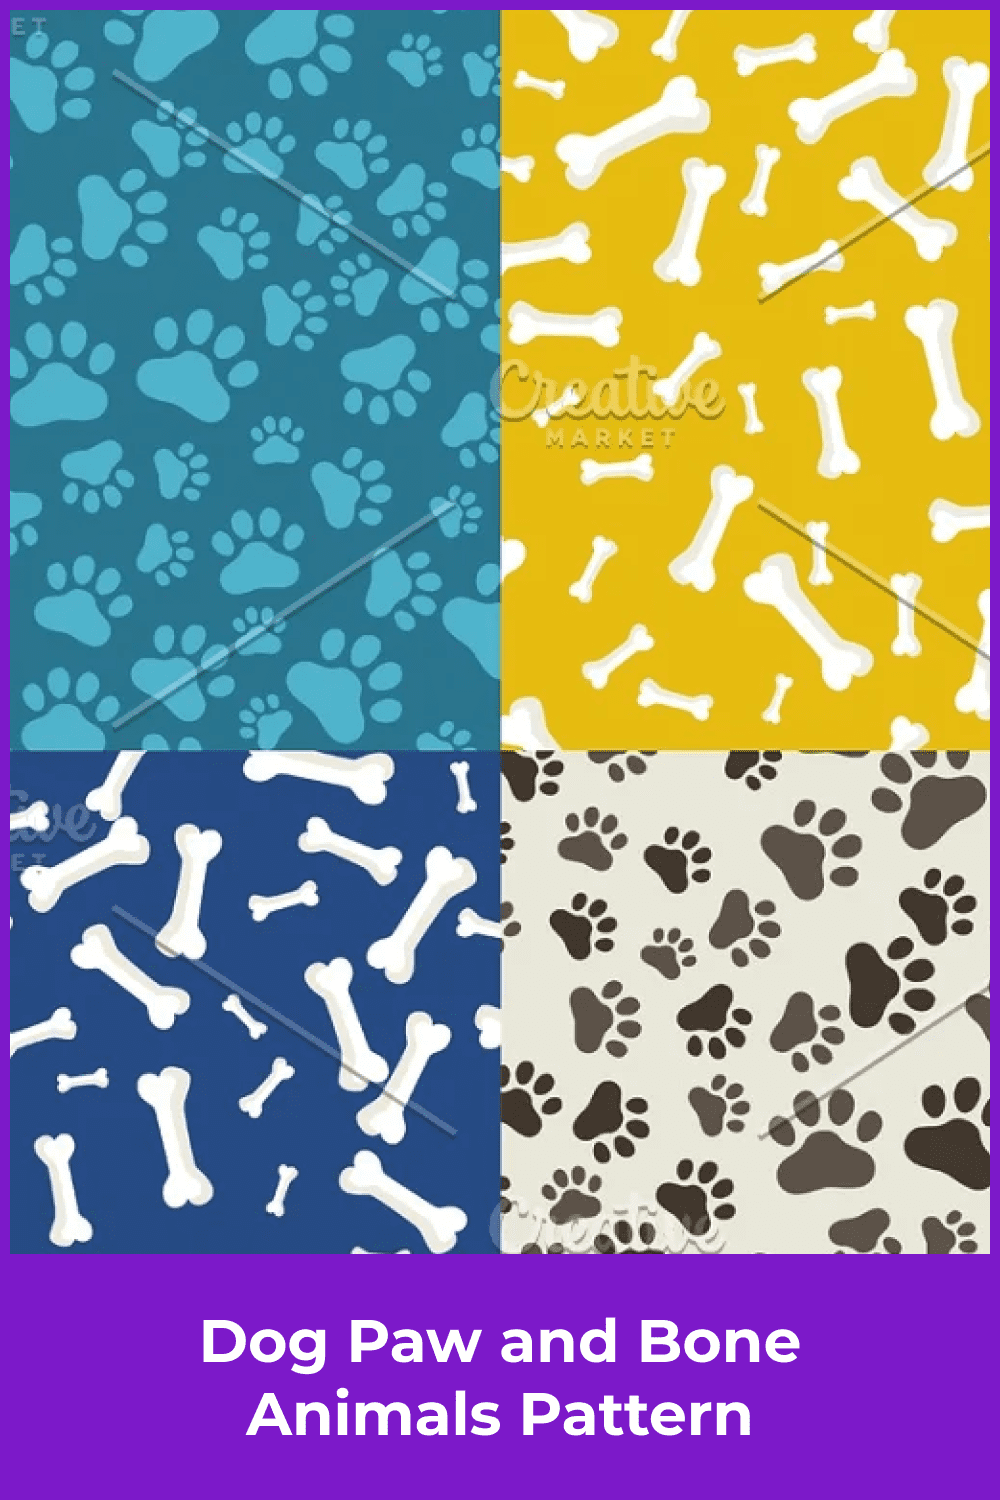 Dog Paw and Bone Animals Pattern.